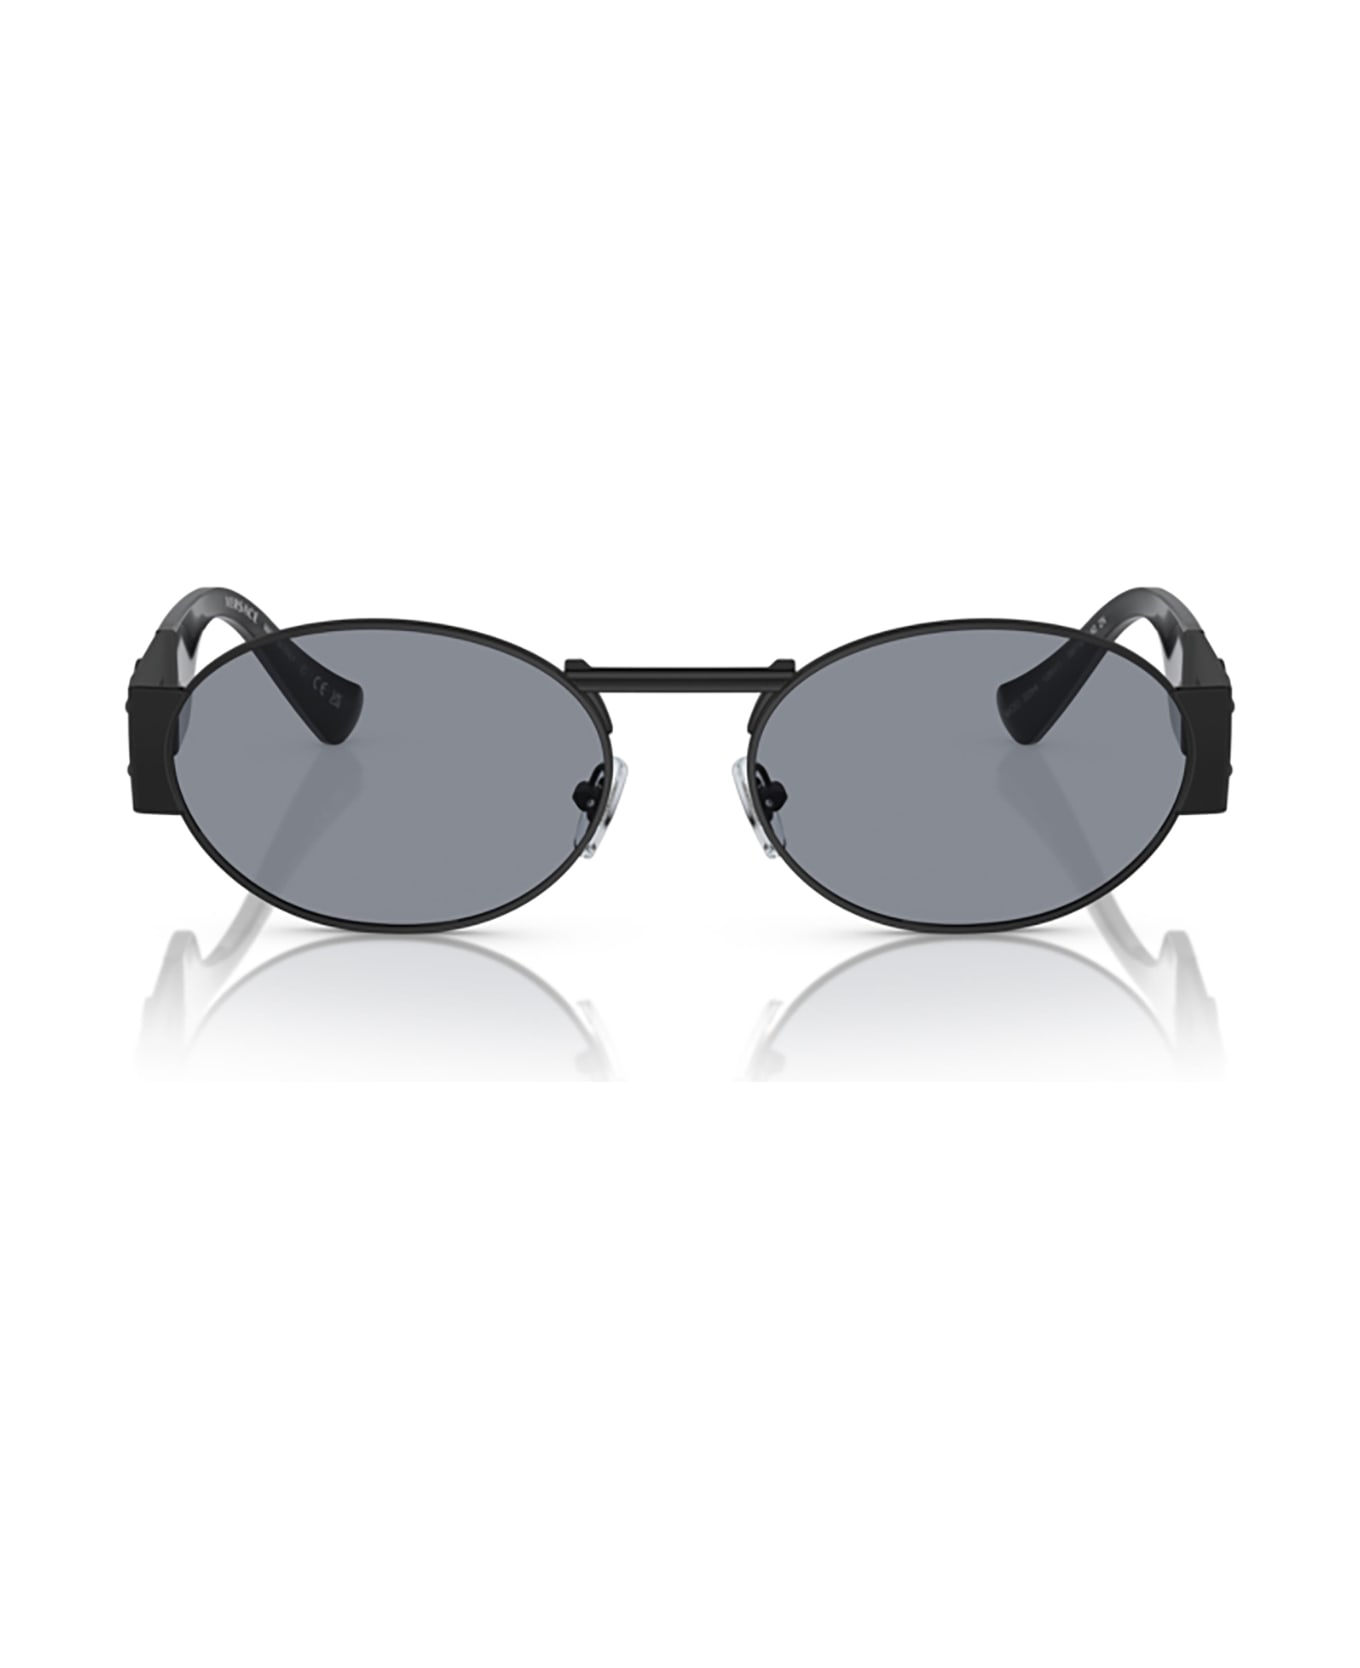 Versace Eyewear Ve2264 Matte Black Sunglasses - Matte black